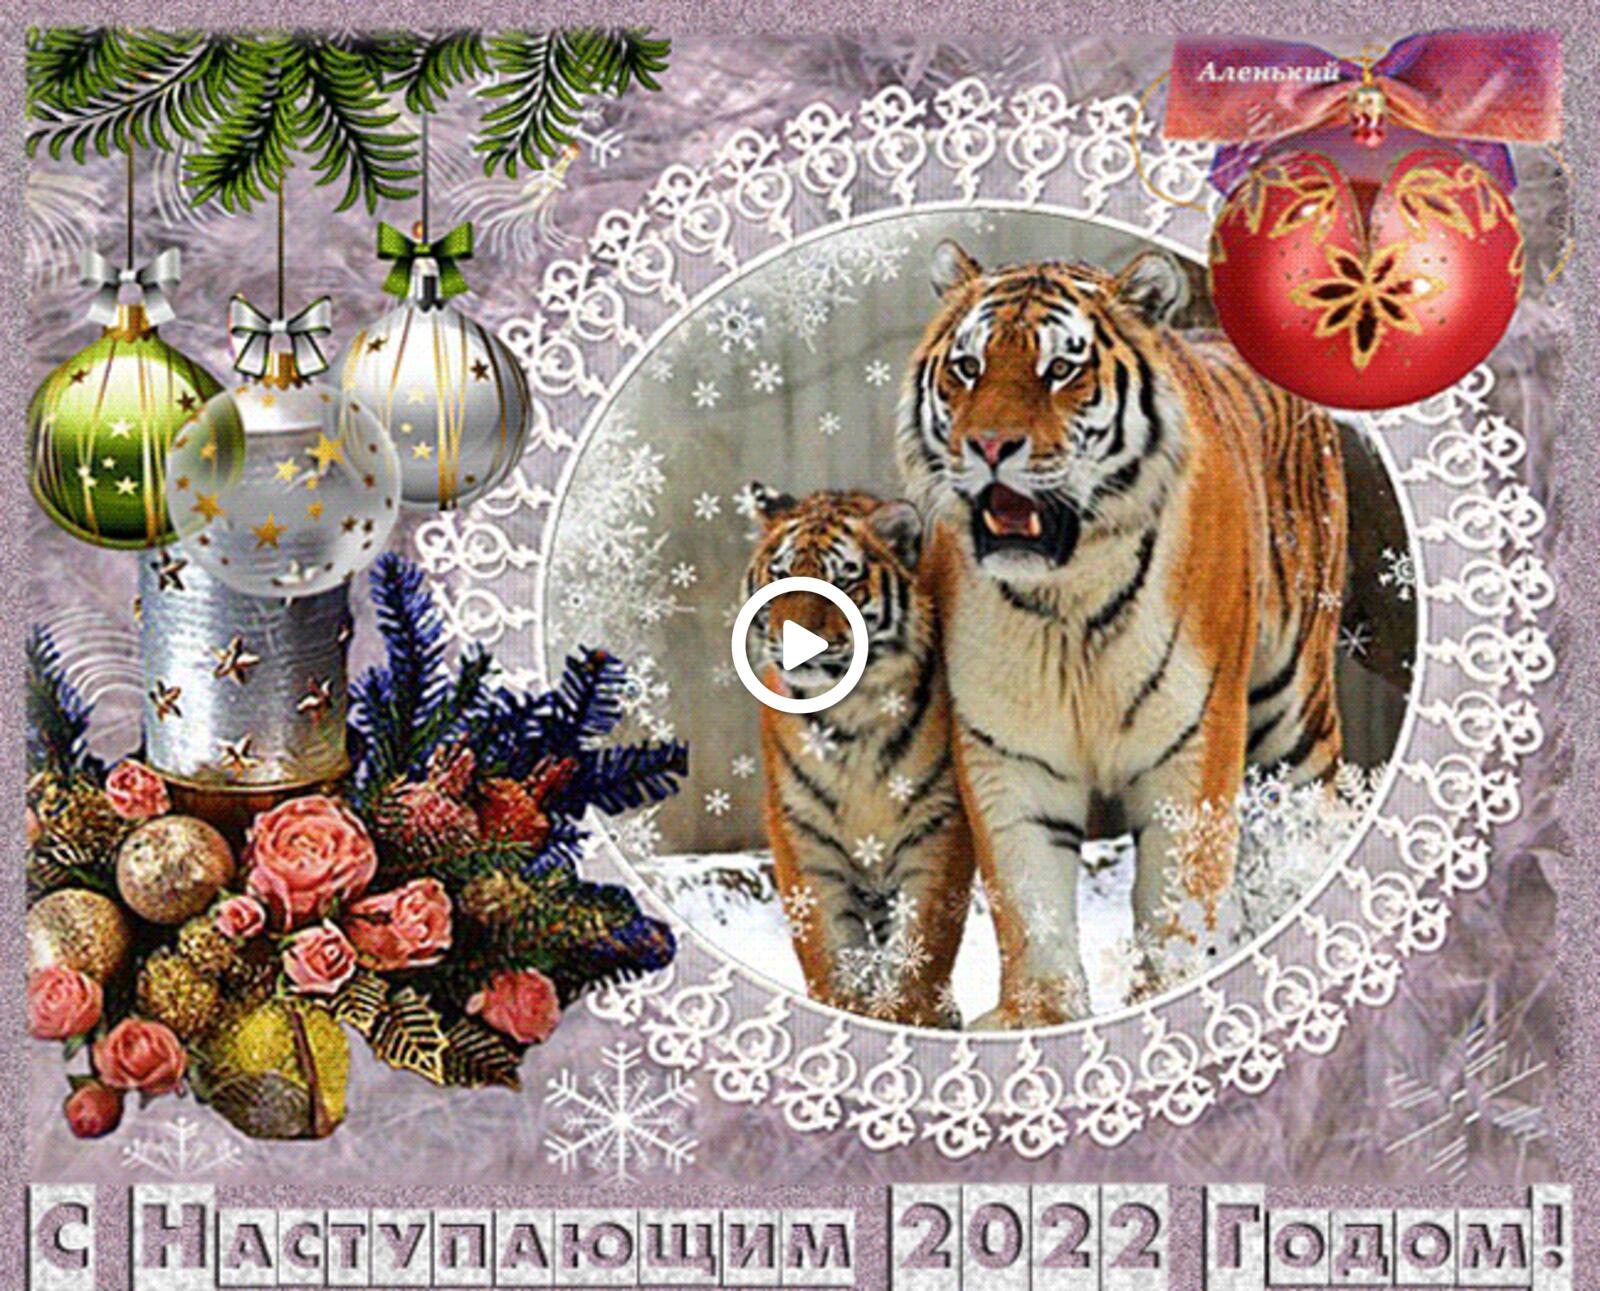 tigers big cat wild cat